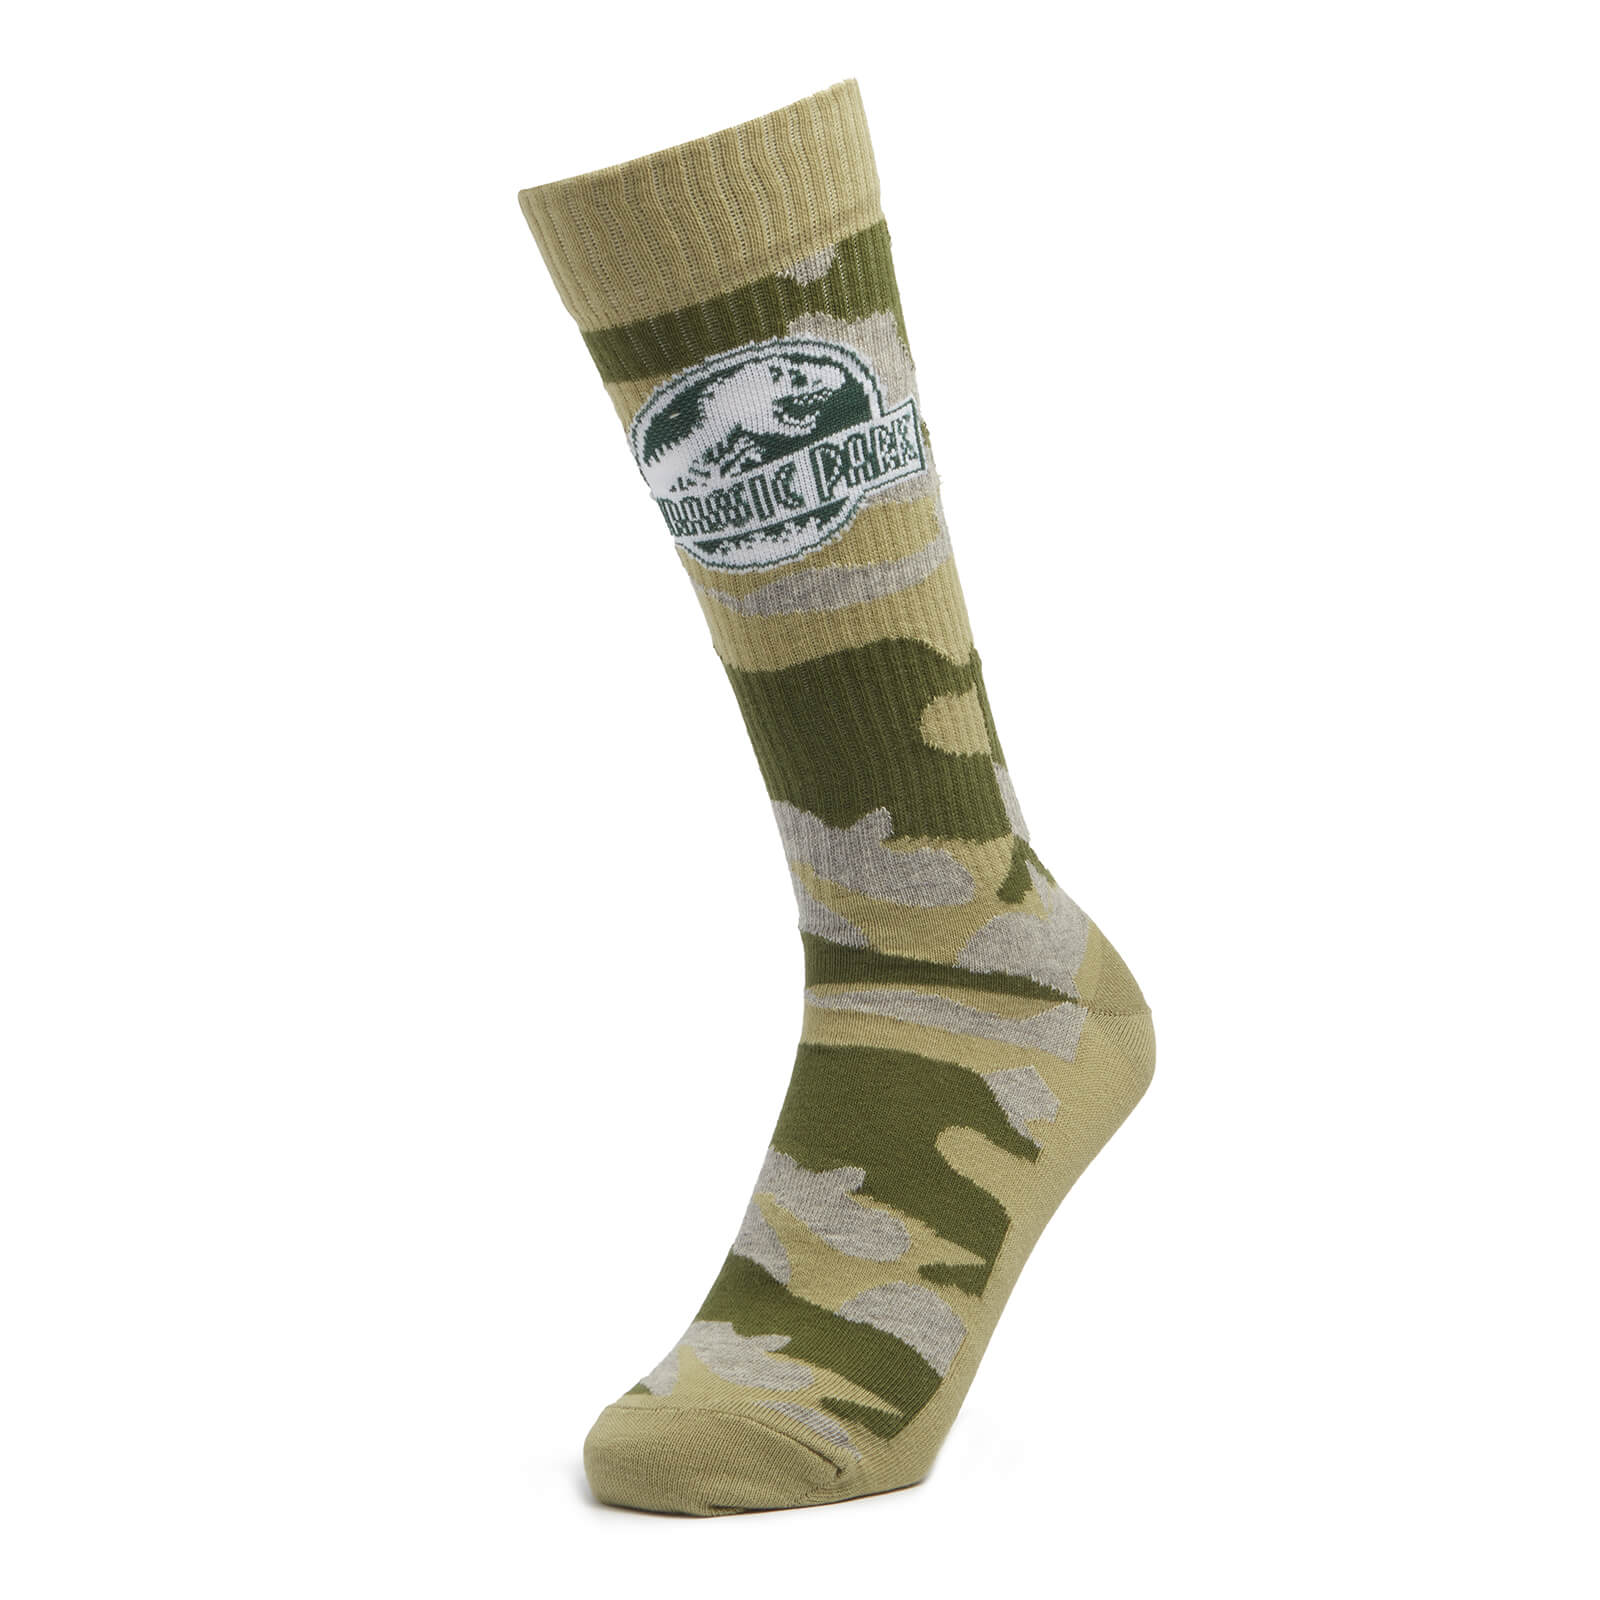 Men's Jurassic Park Camo Sports Socks - Khaki - UK 8-11